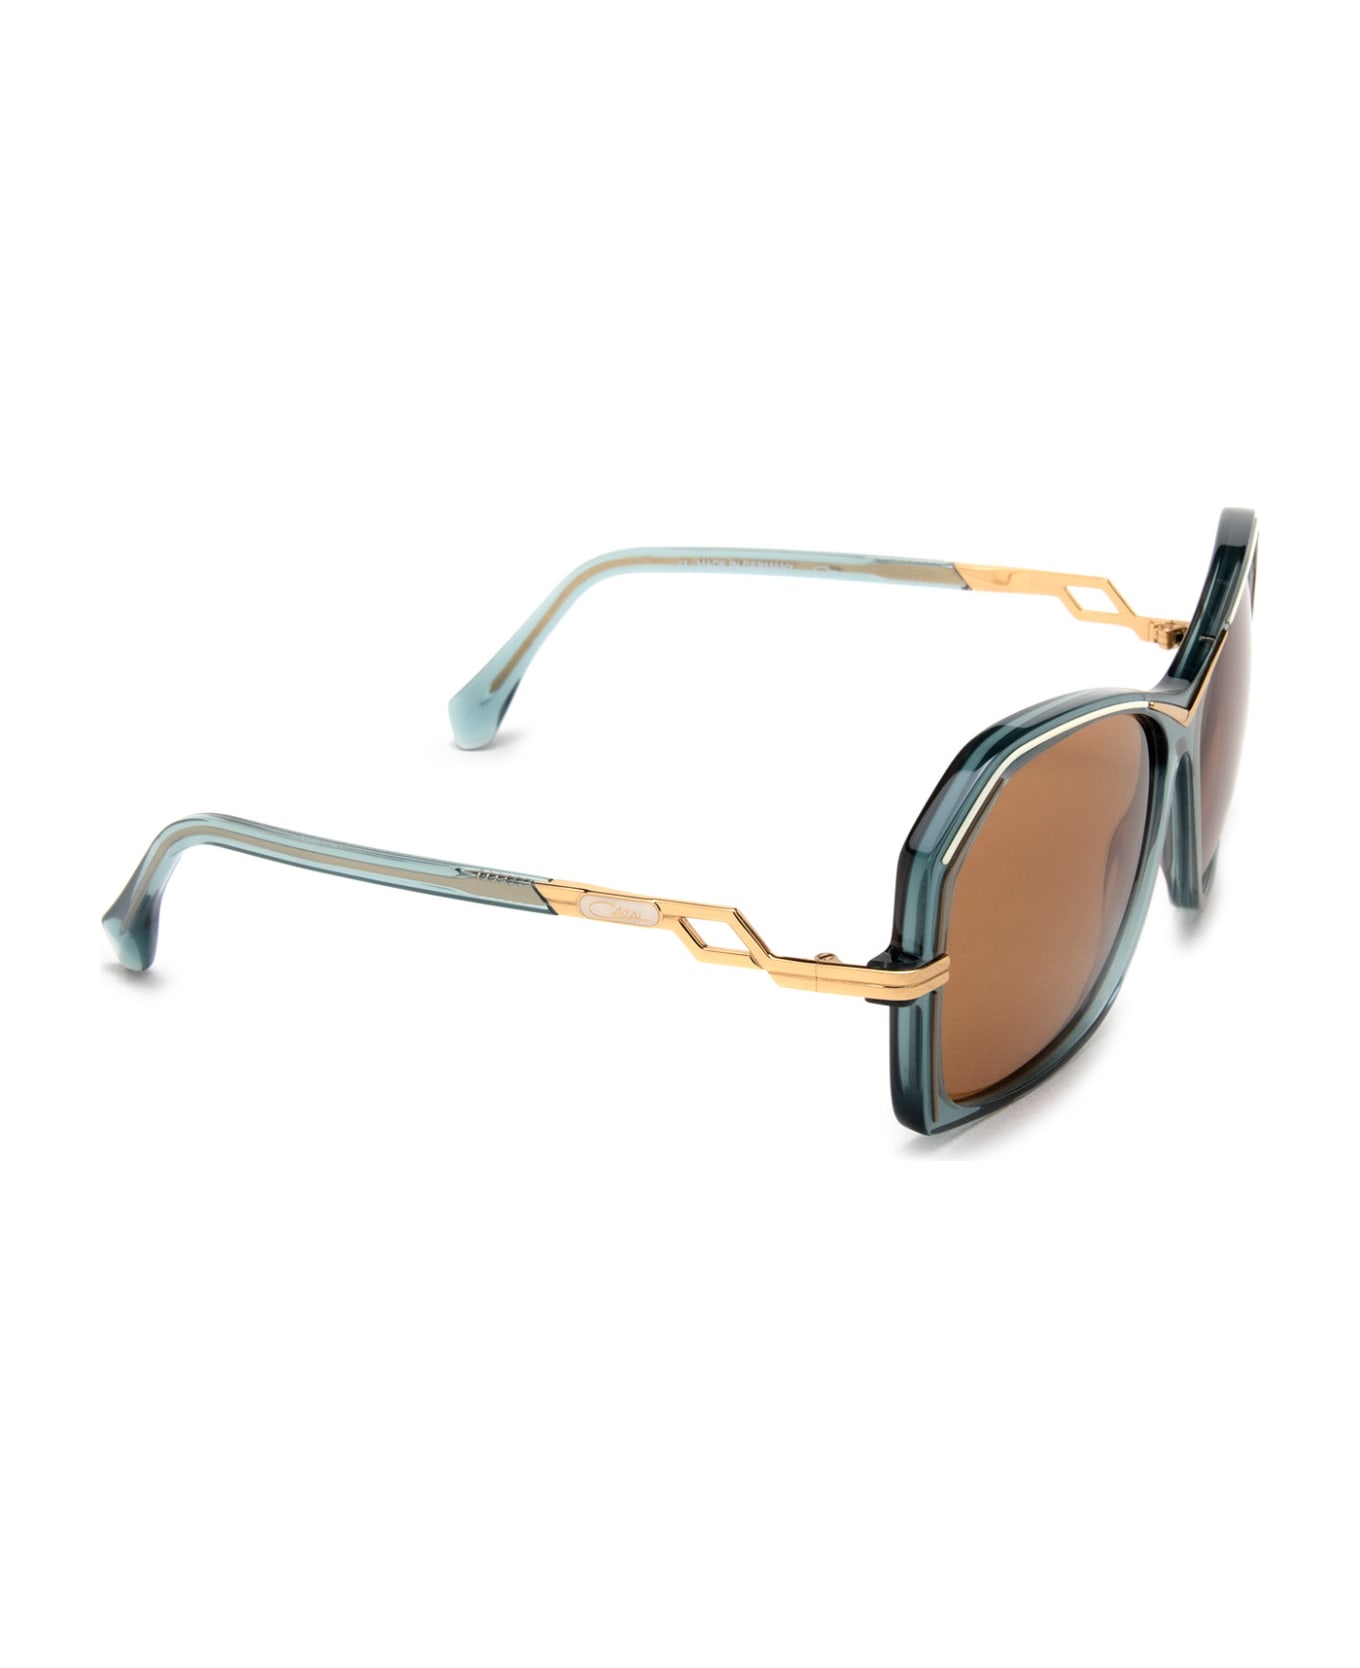 Cazal 8510 Valient Sunglasses Matte Black Sunglasses - Valient Sunglasses Matte Black